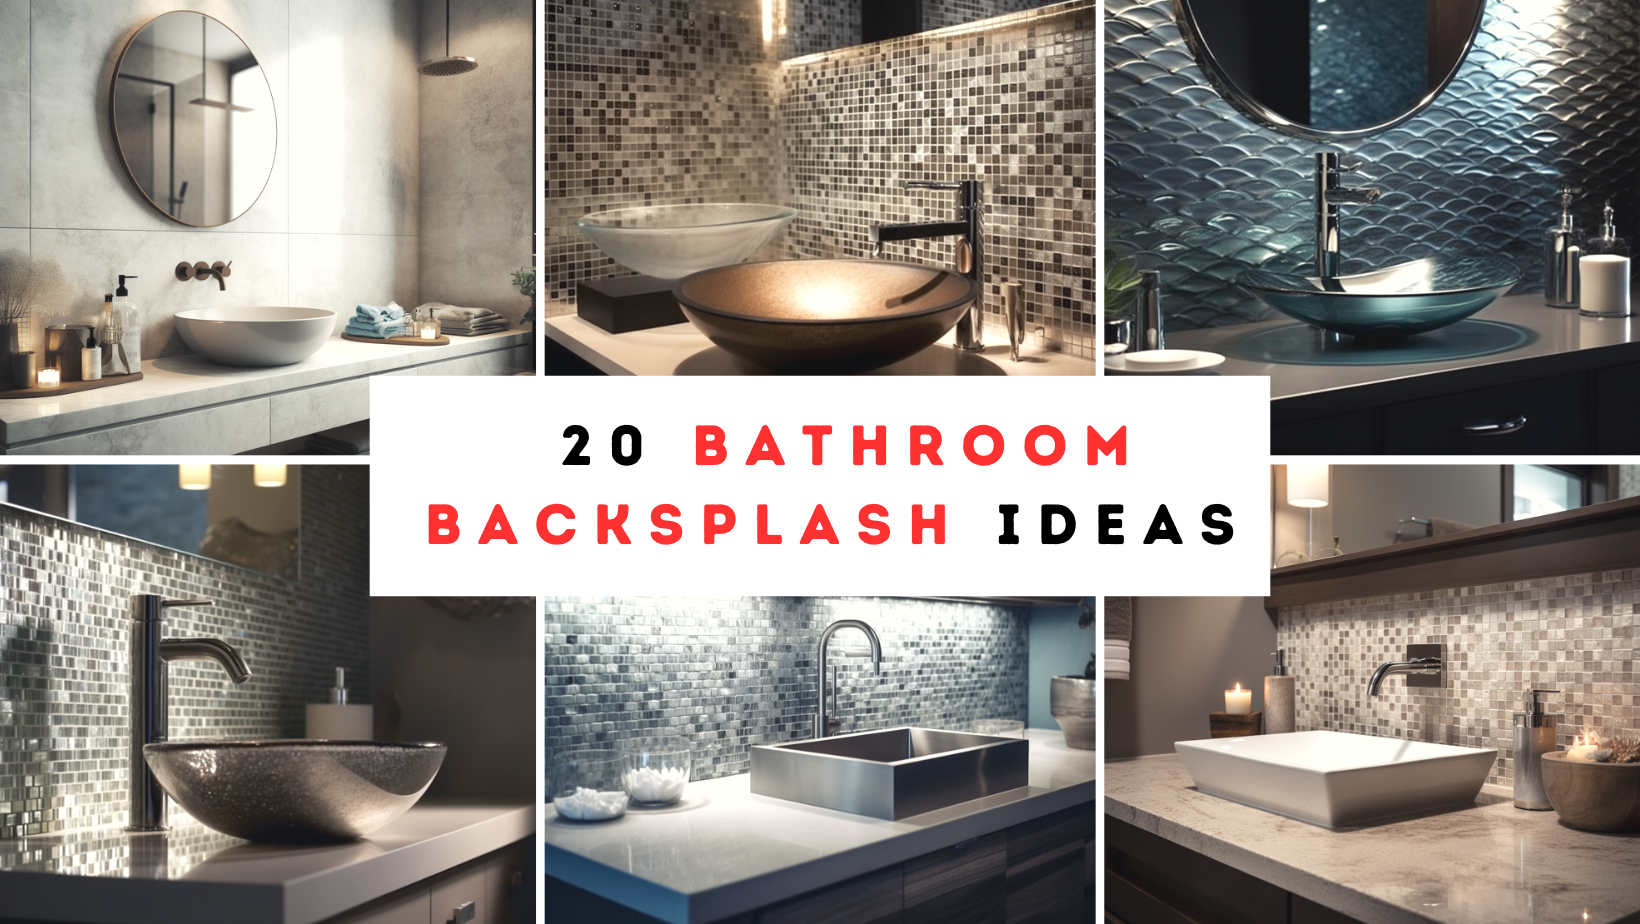 20 Bathroom Backsplash Ideas You Need to See